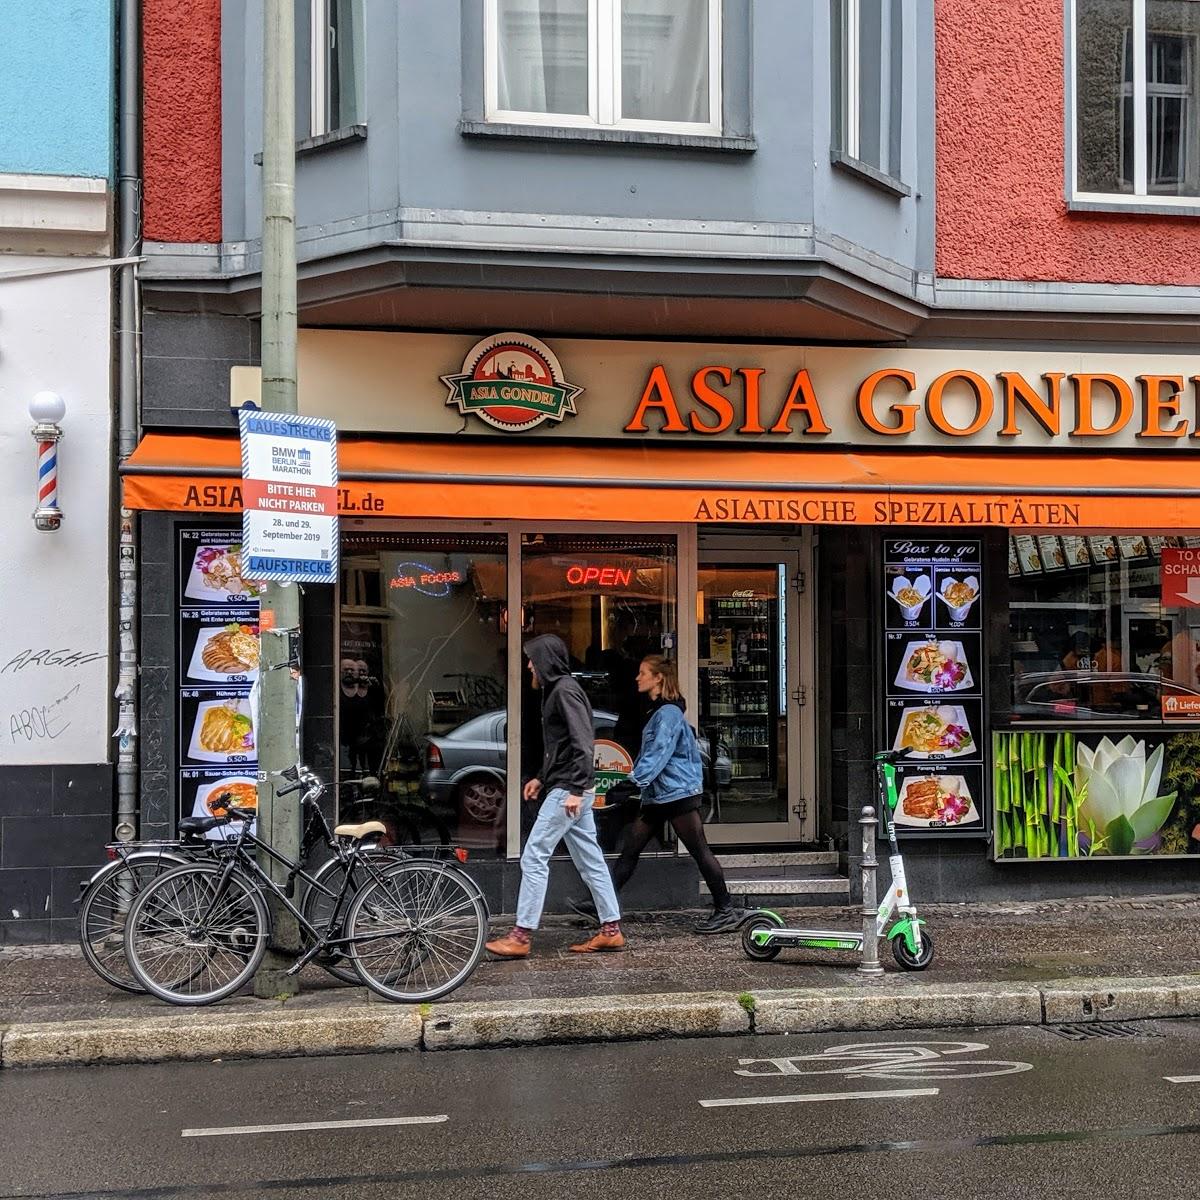 Restaurant "Asia Gondel" in Berlin